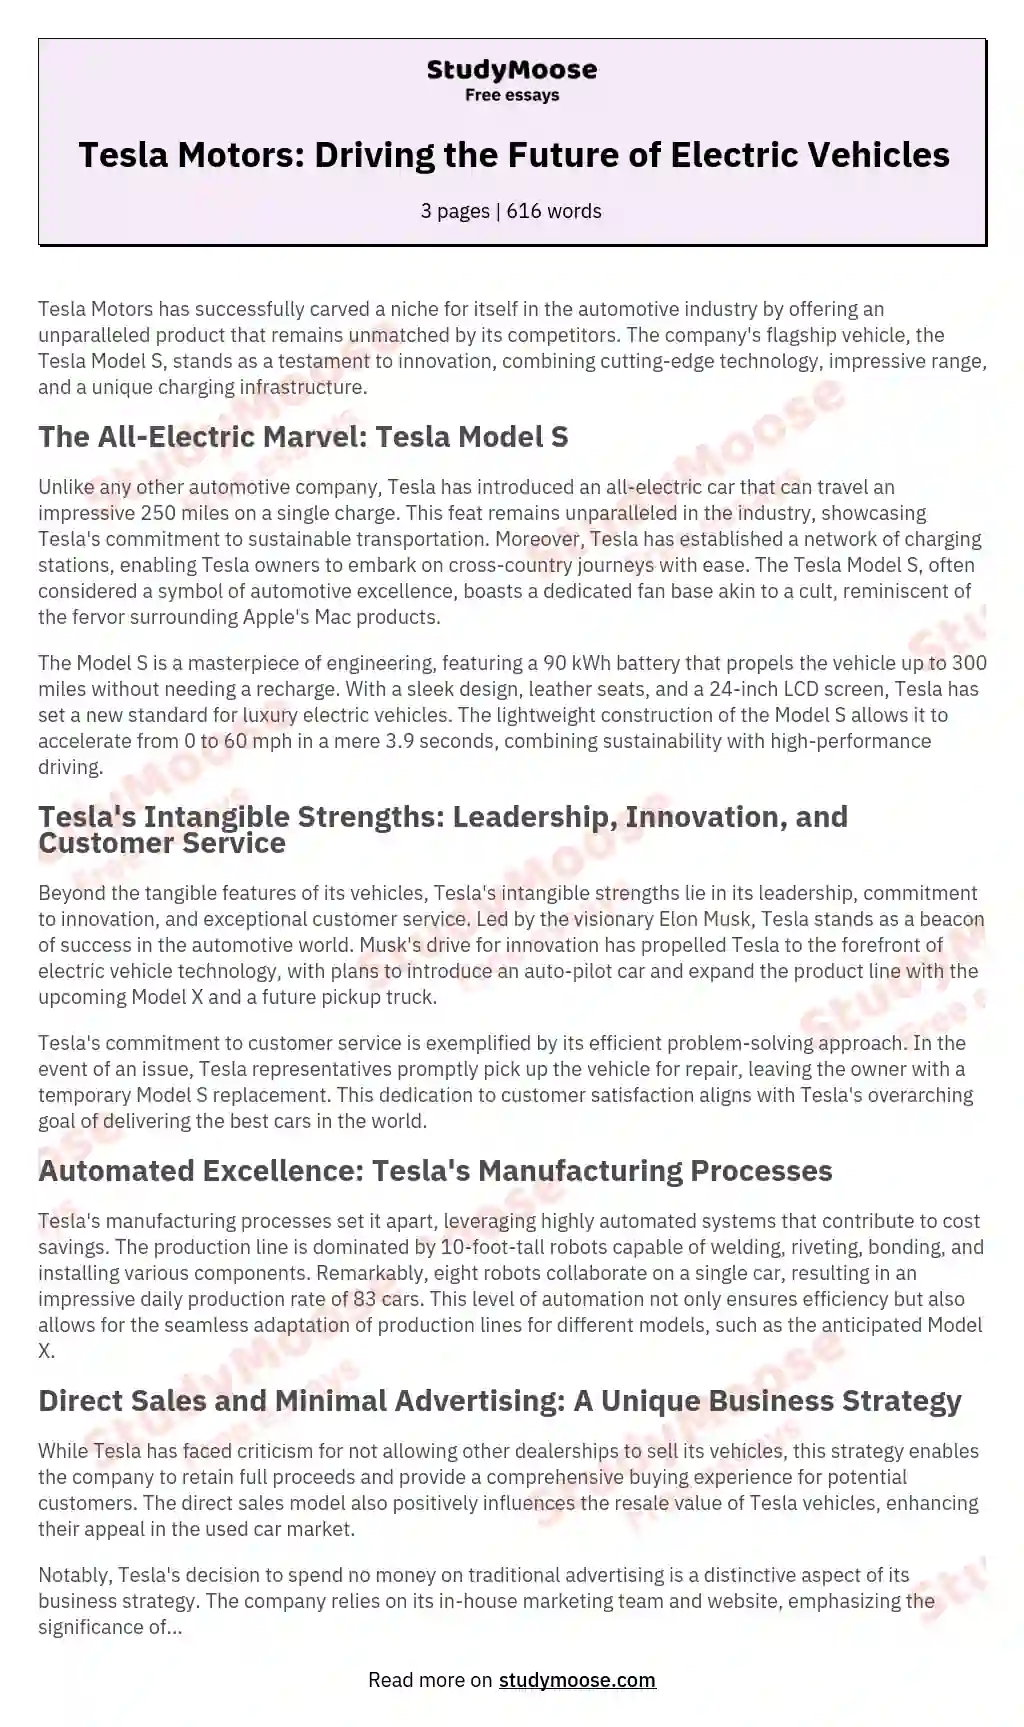 Tesla Motors: Driving the Future of Electric Vehicles essay